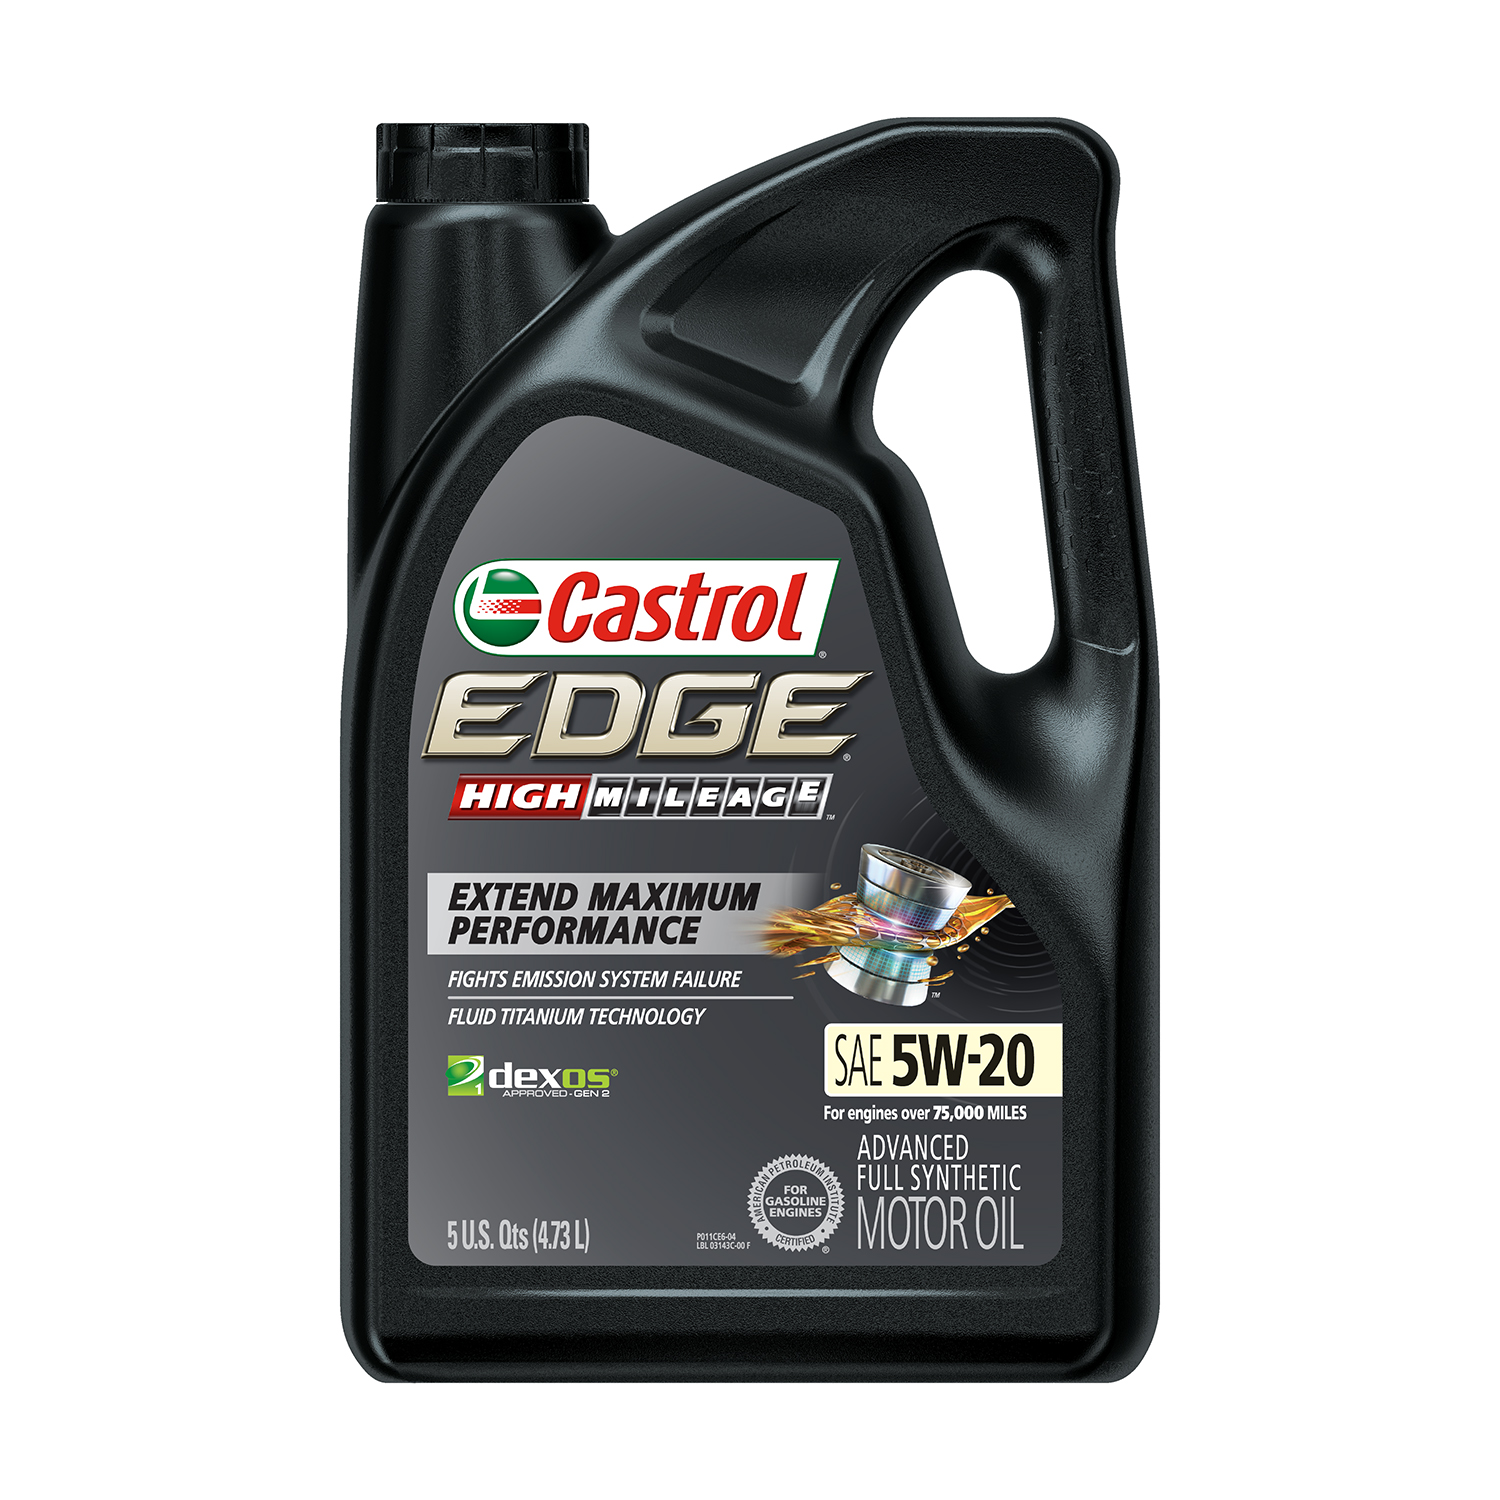 Castrol Edge High Mileage 5W 20 Advanced Full Synthetic Motor Oil 5 